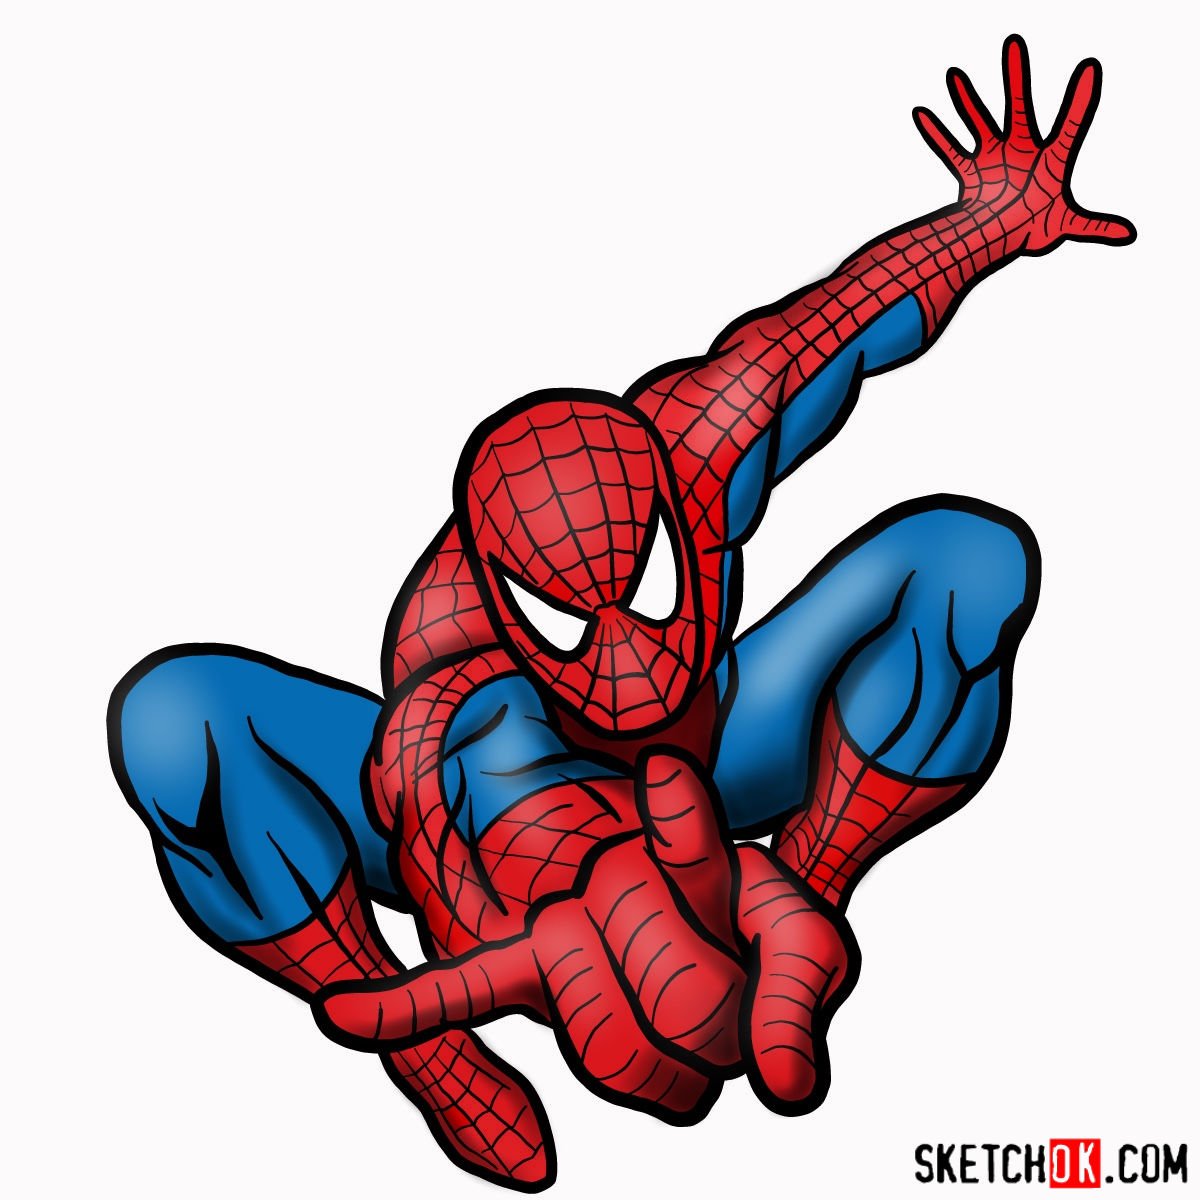 Download Venom Vs Spiderman Sketch Pictures | Wallpapers.com